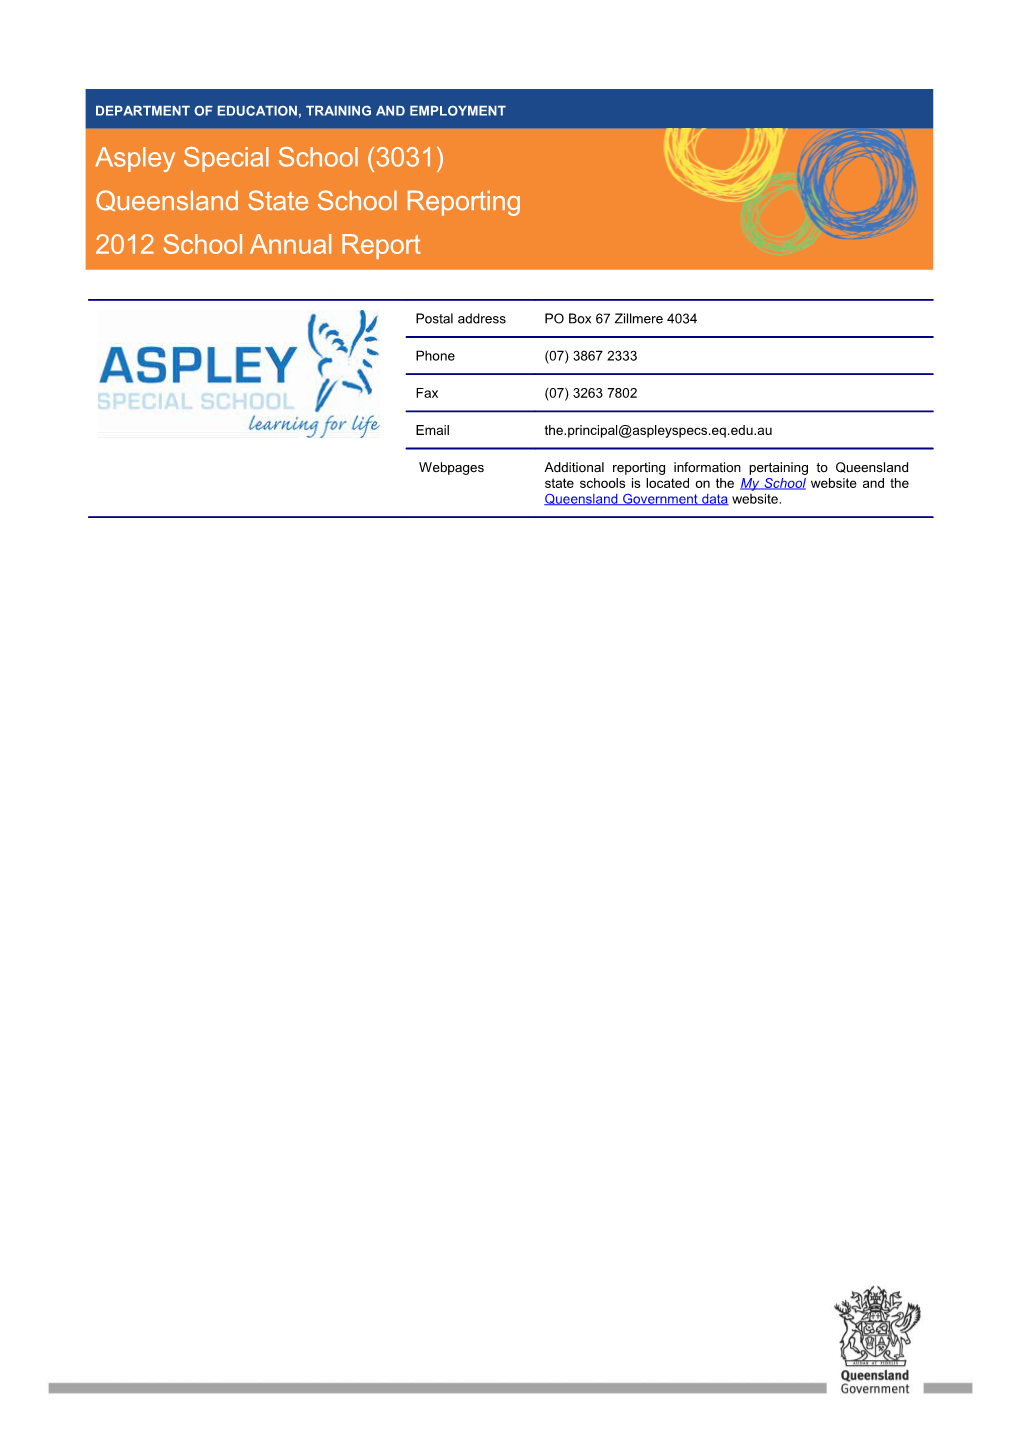 Aspley Special School Annual Report 2012